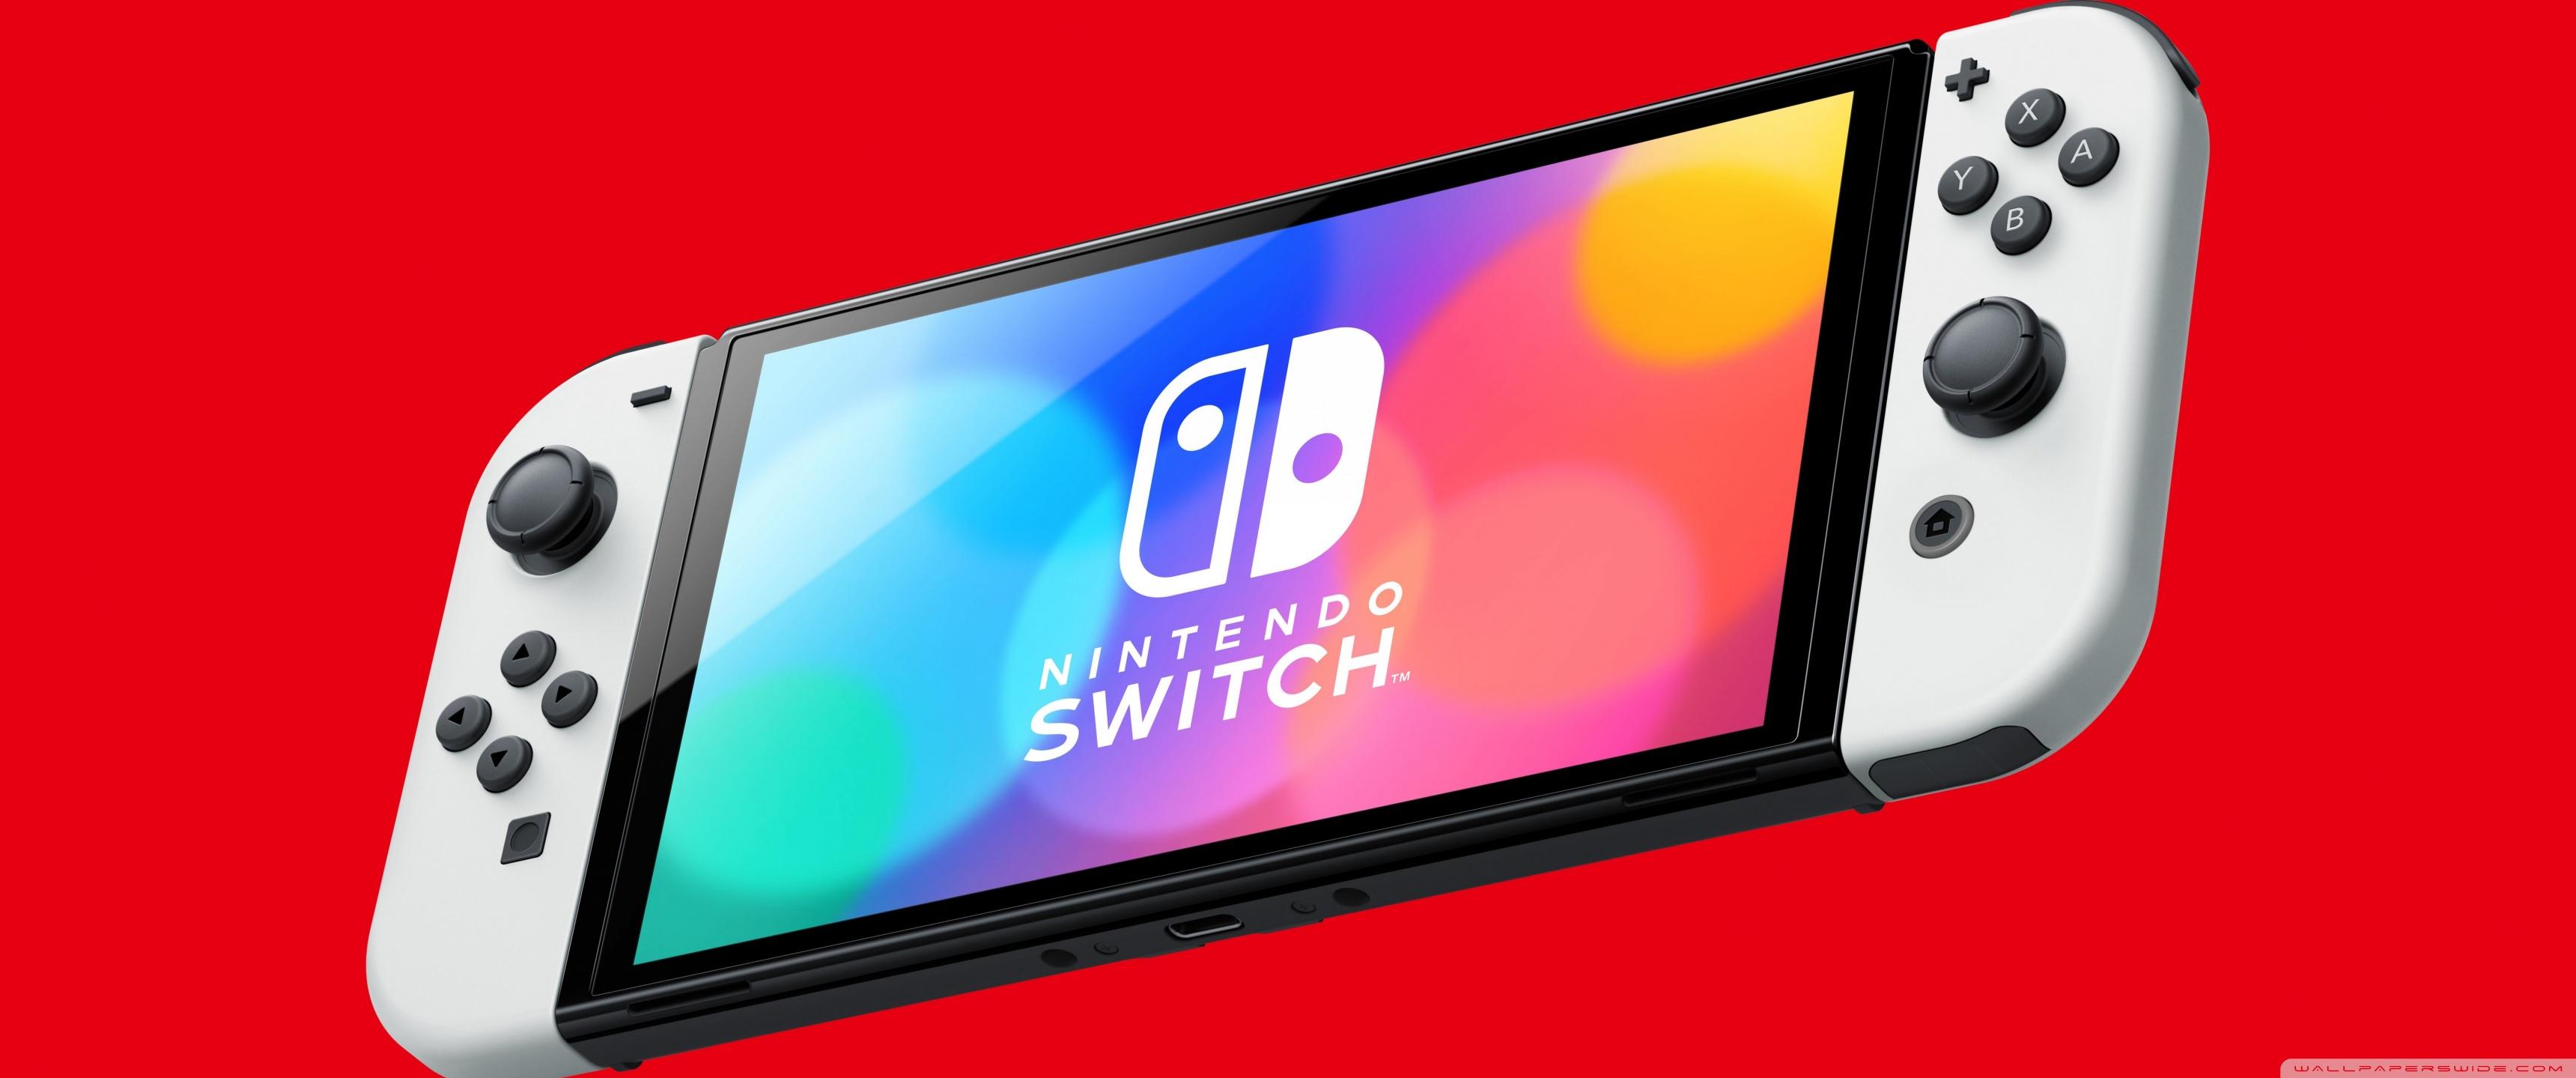 Nintendo Switch Oled Ultra HD Desktop Background Wallpaper For 4k